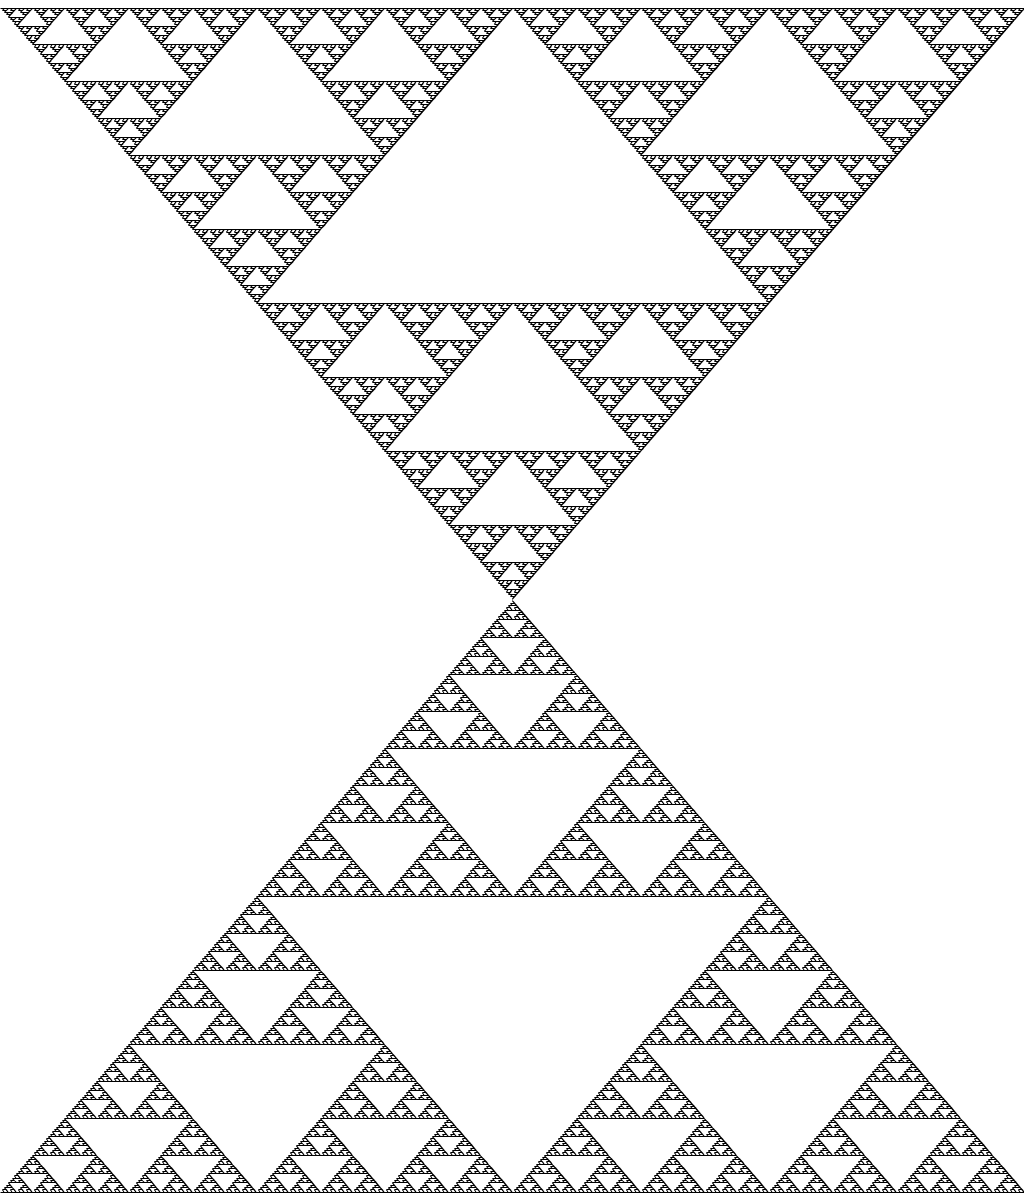 test/reference/shape-sierpinski.pdf.argb32.ref.png